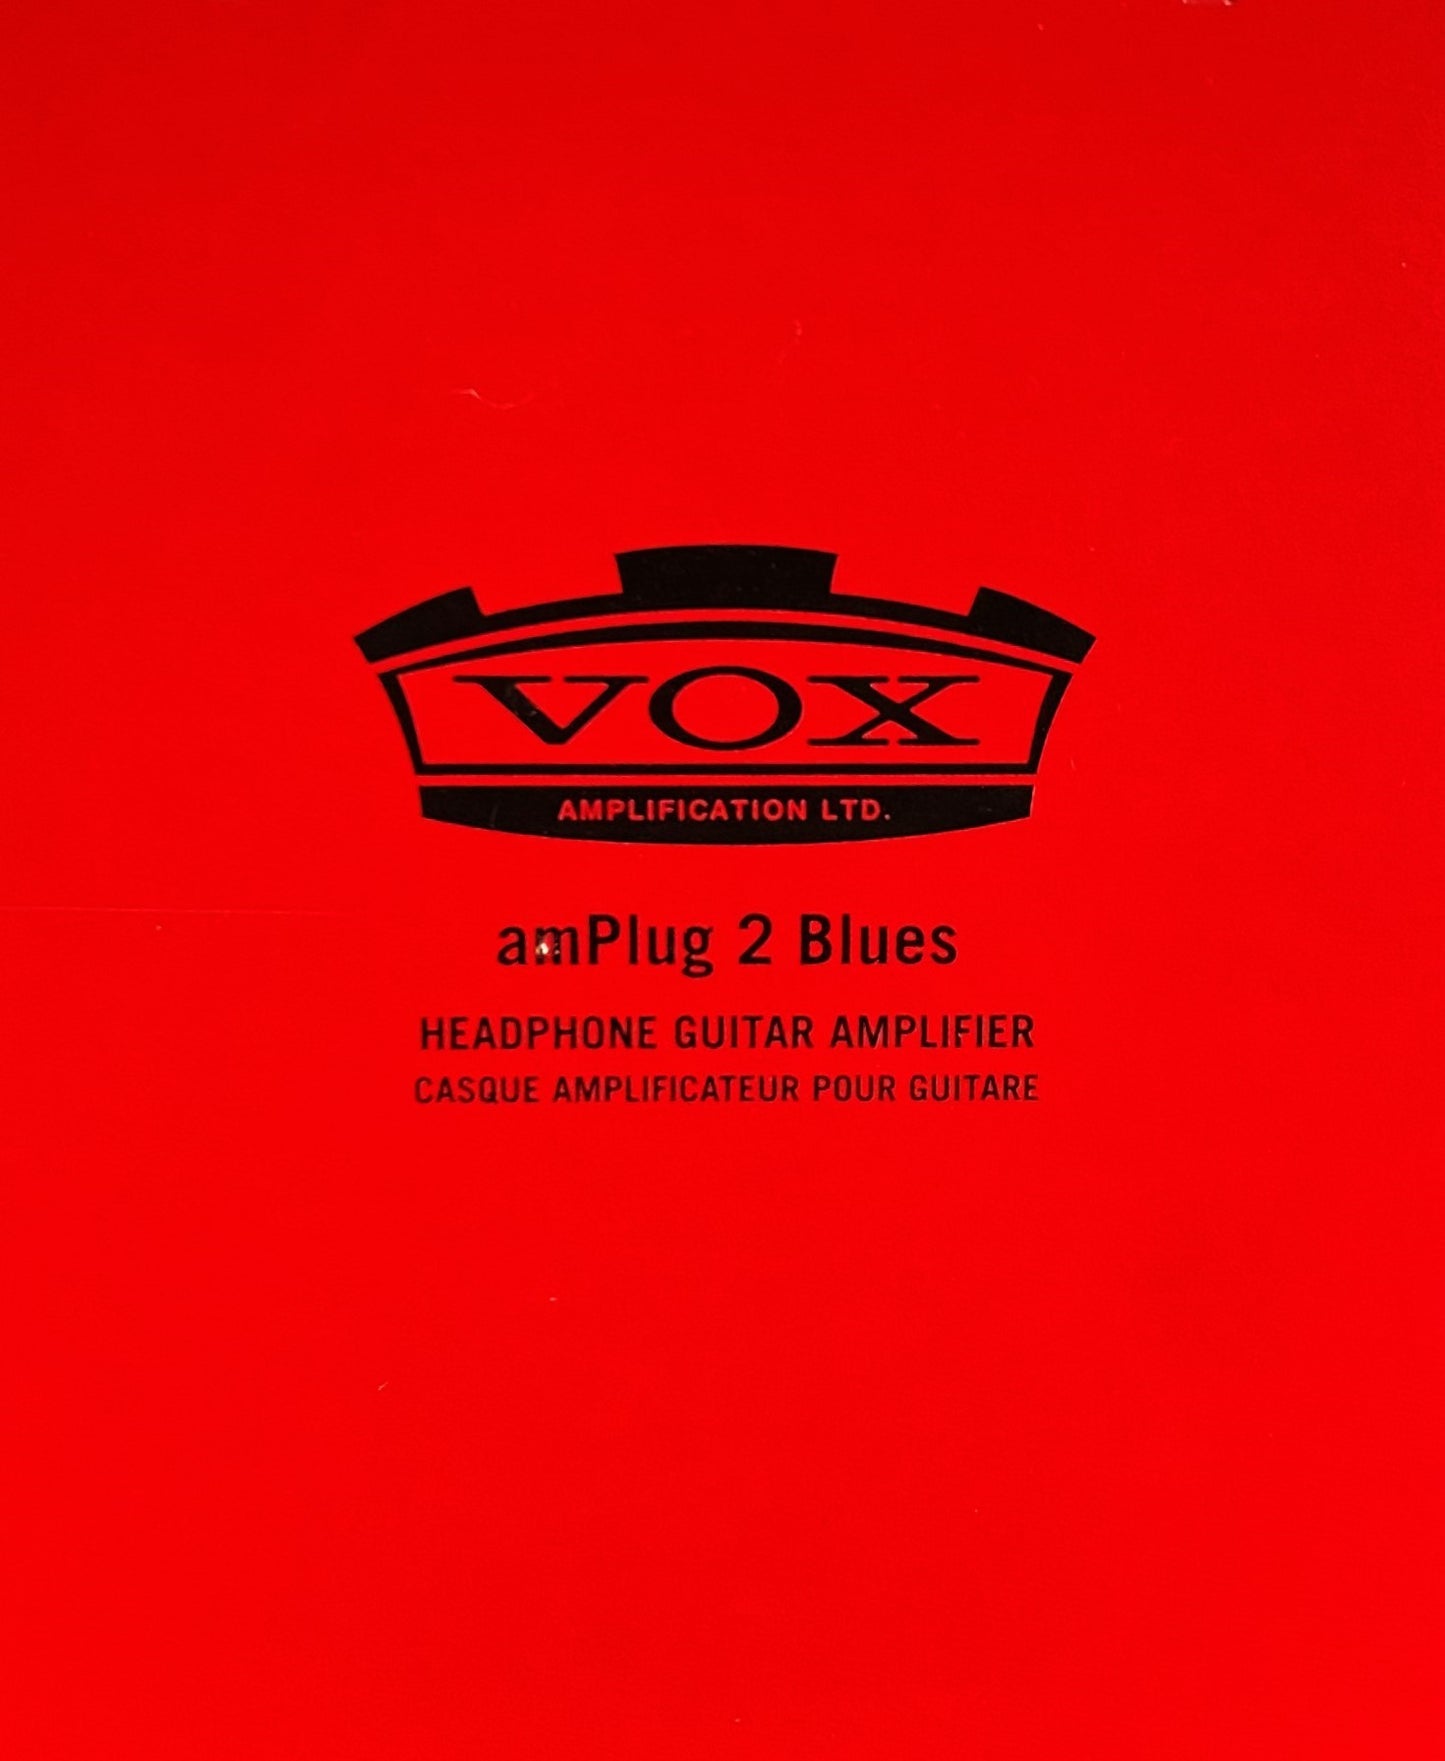 VOX amPlug 2 BLUES Plug In Guitar Practice Headphone Amplifier AP2BL